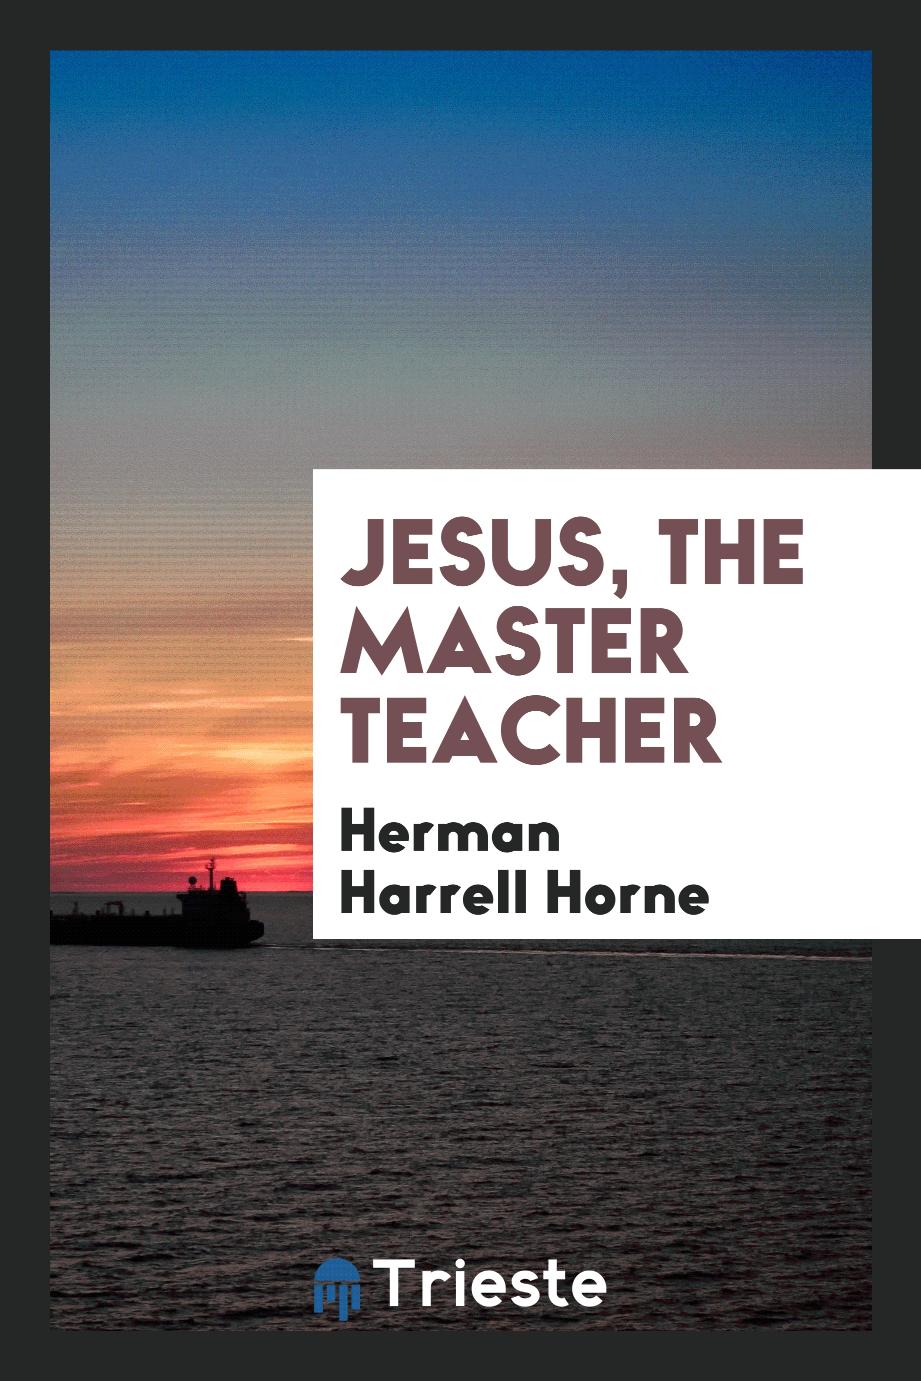 Jesus, the master teacher